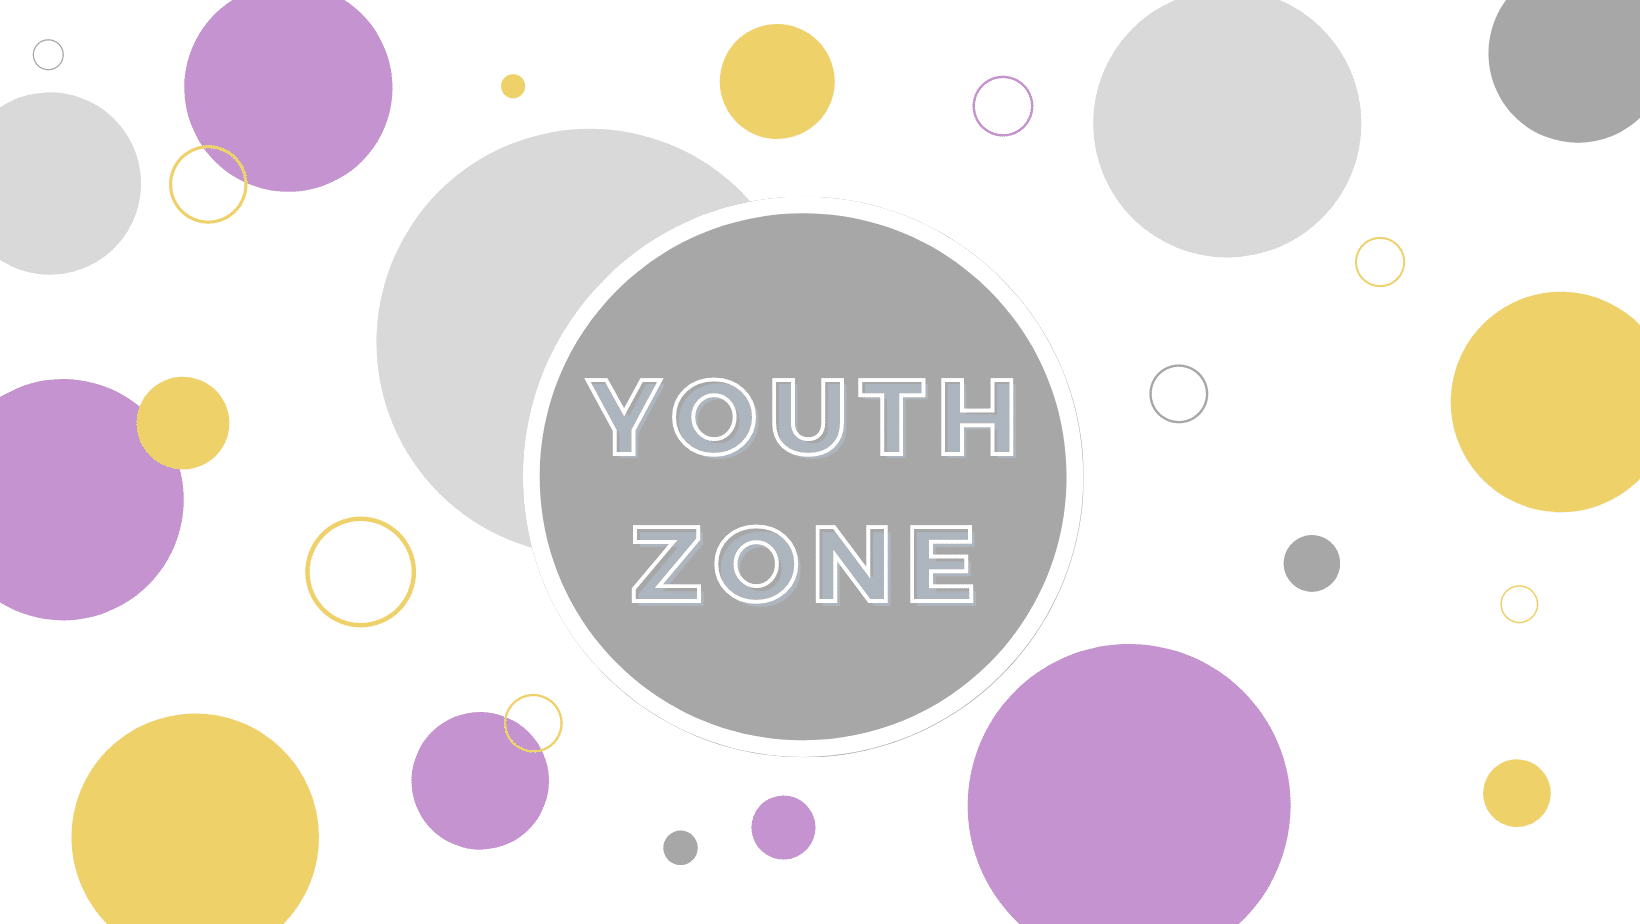 Youth zone logo